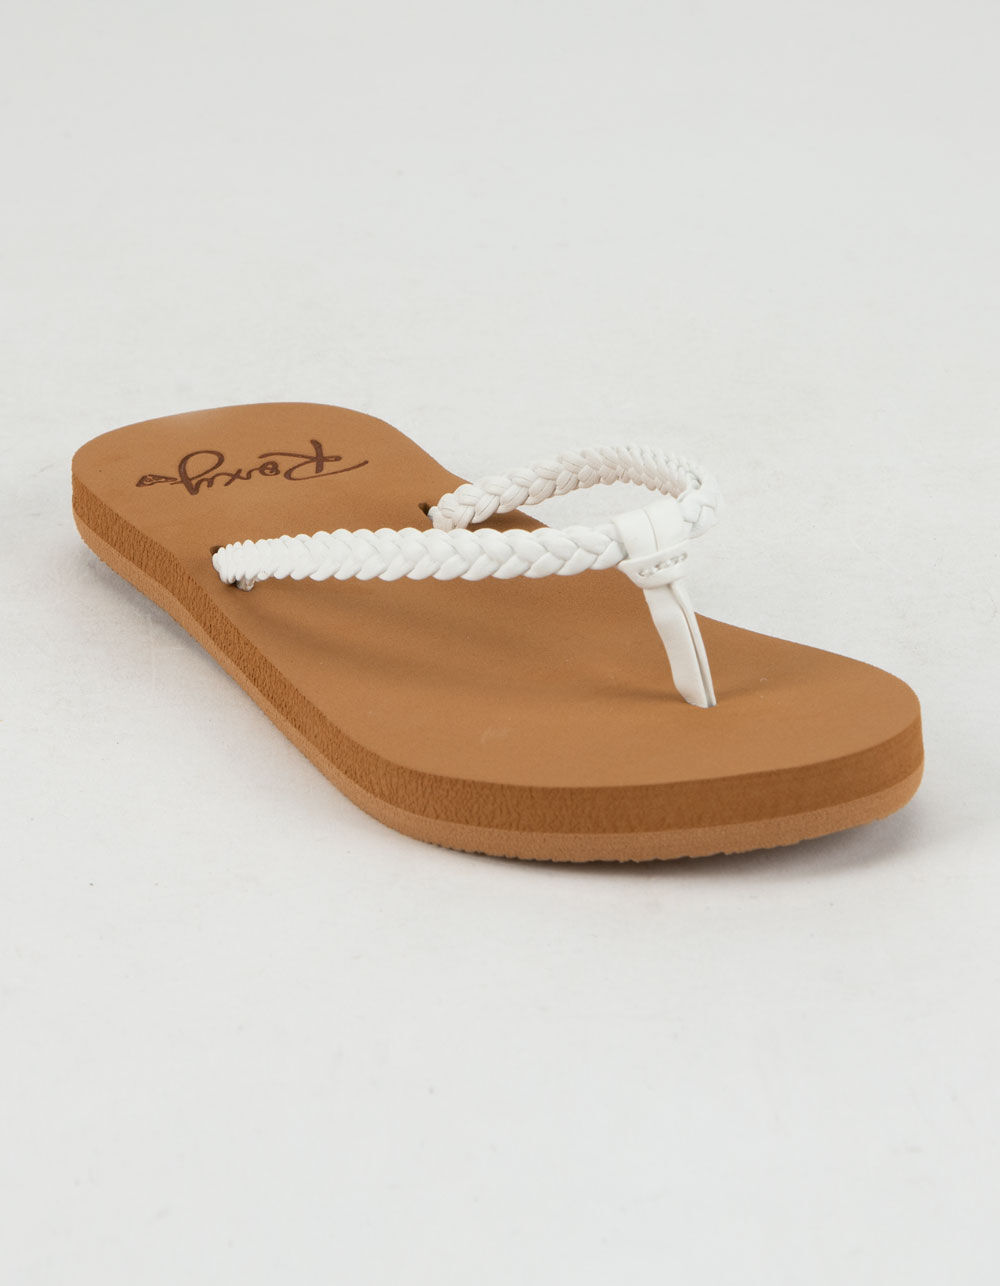 Roxy Womens Costas Casual Beach Sandals - Brown/White 